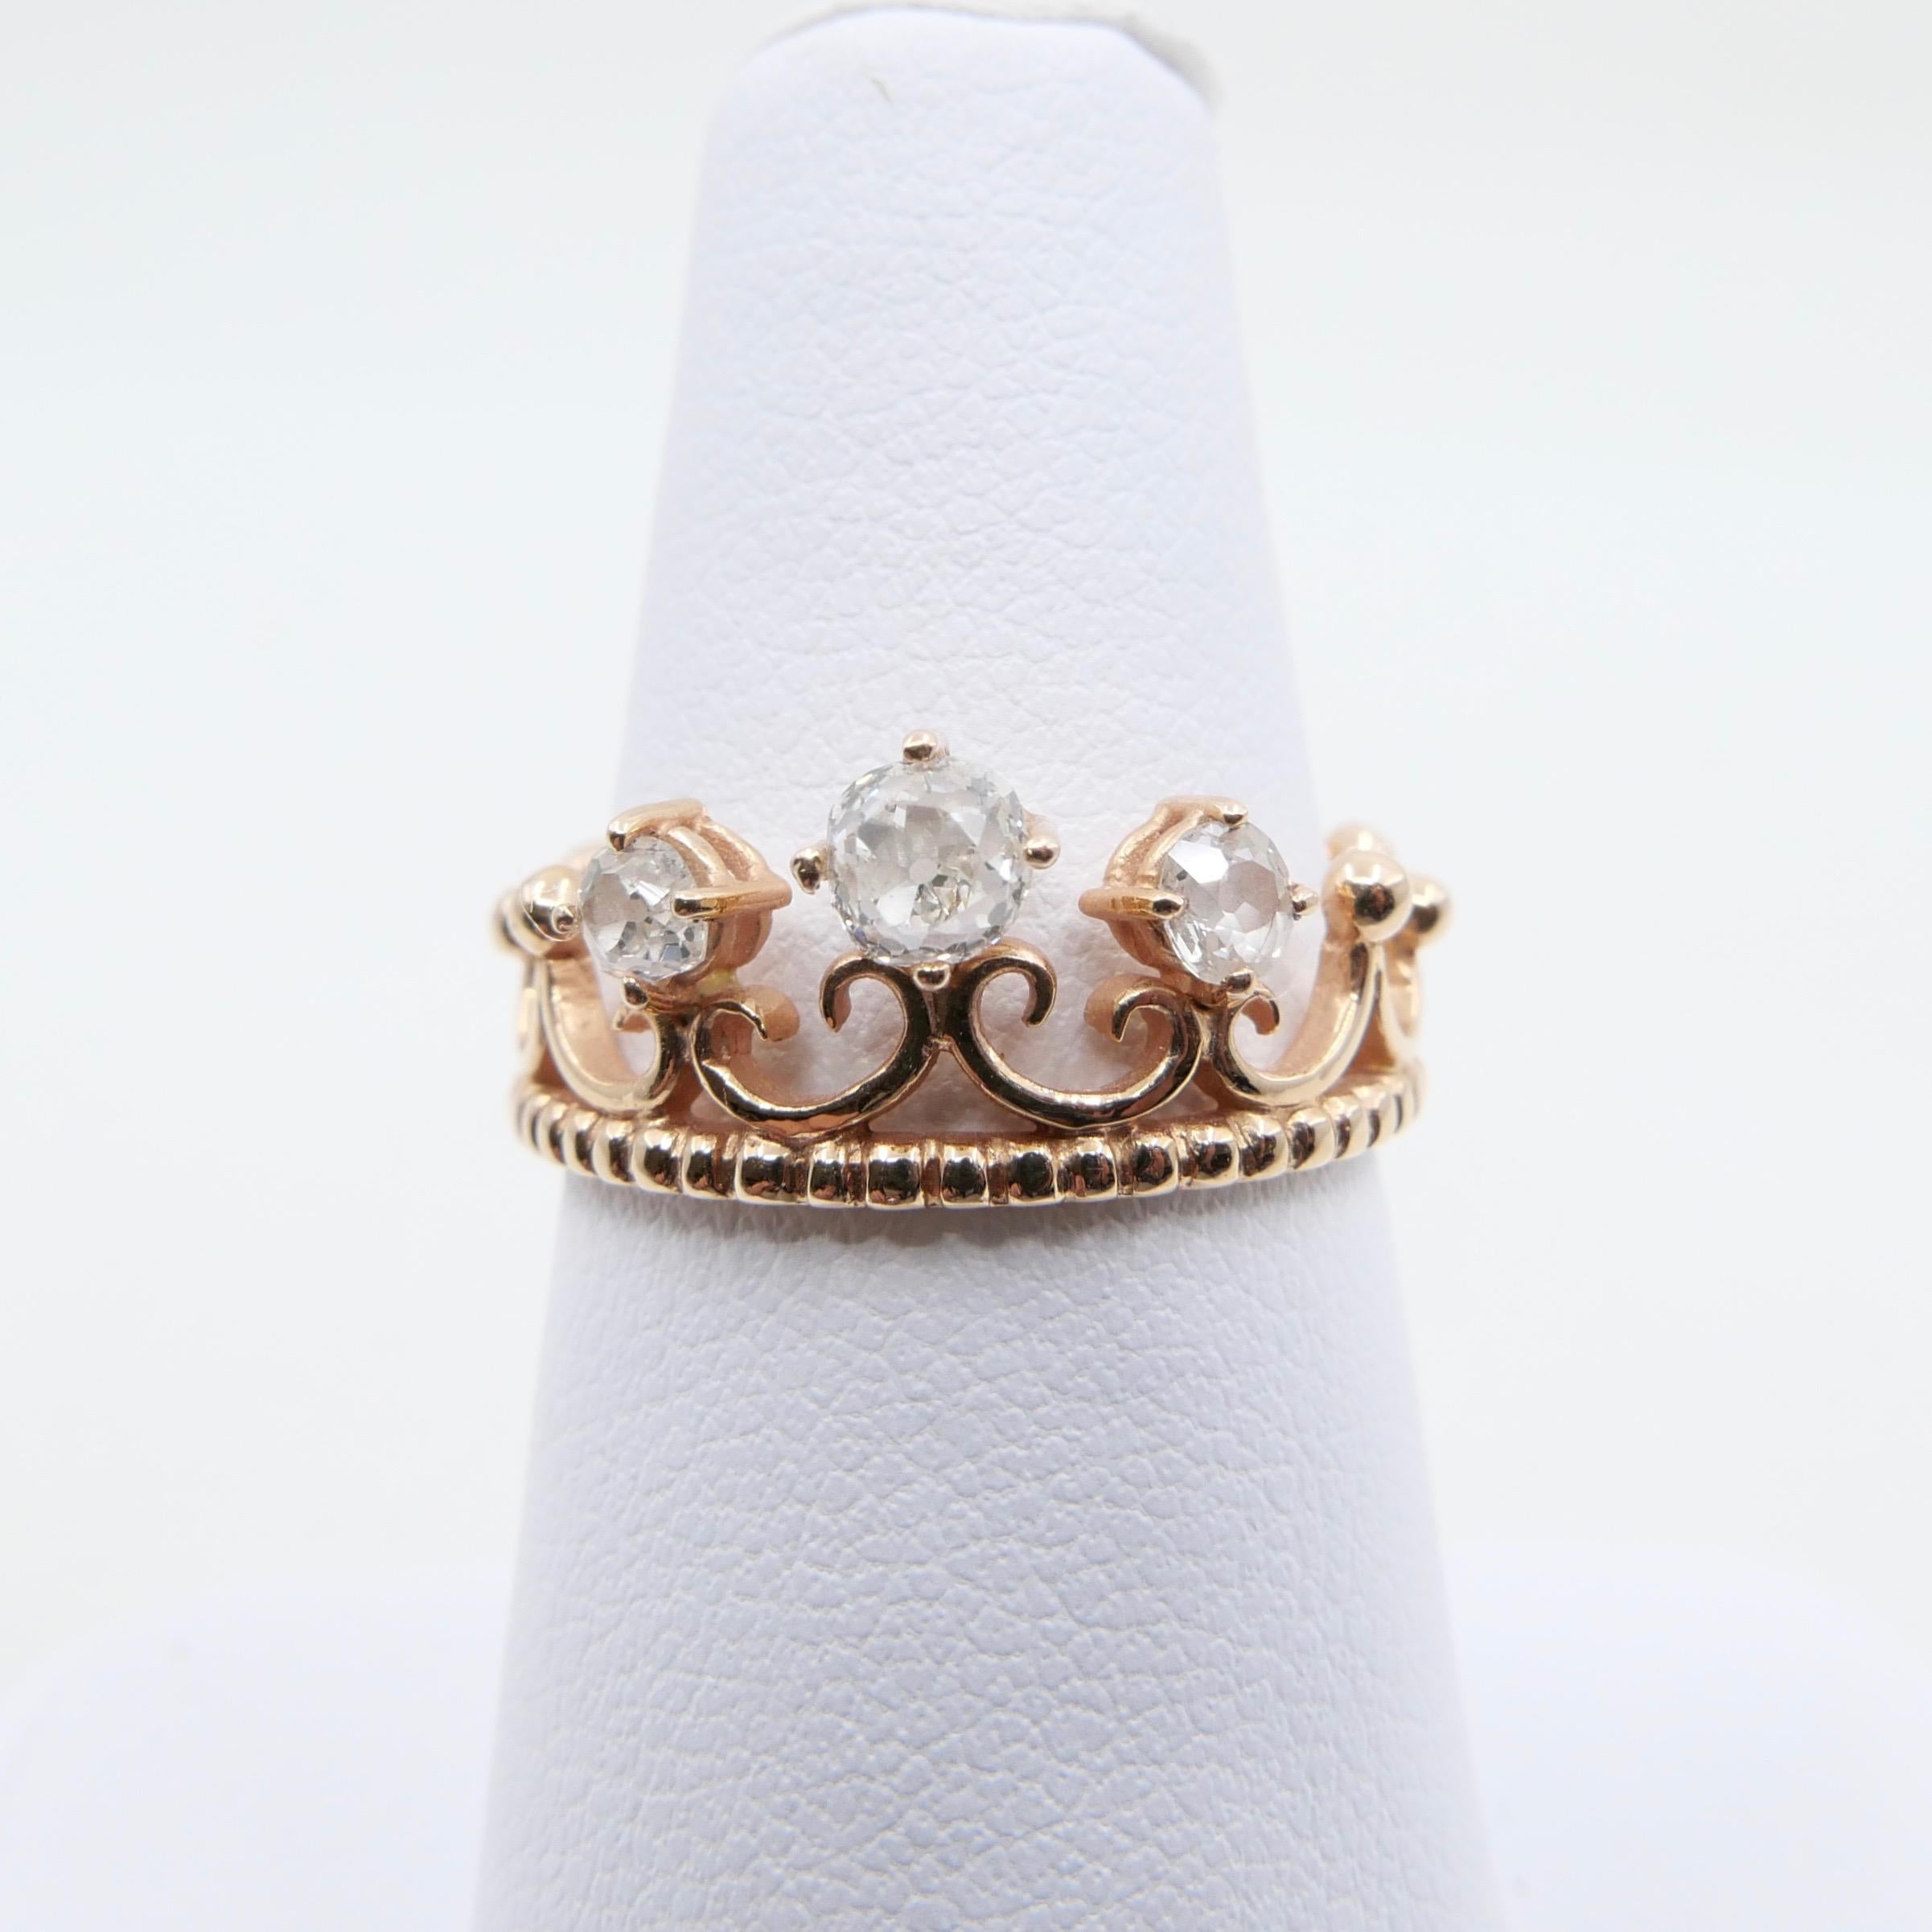 18 Karat Rose Gold Crown Ring With Old Mine Cut Diamonds 0.51 Carat 3